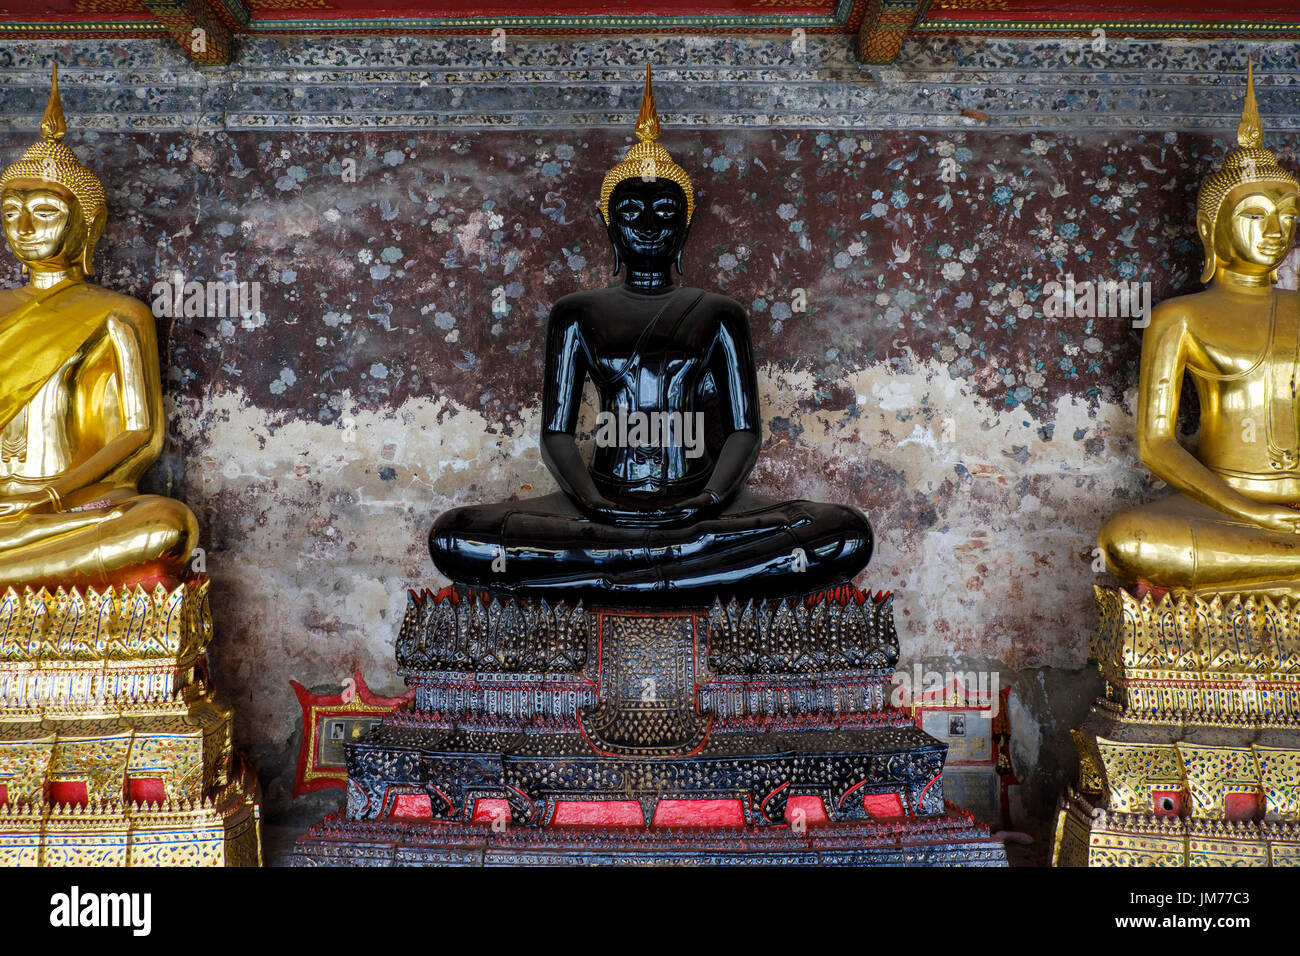 Seduta nero statua di Buddha nel corridoio esterno di Wat Suthat Thepwararam, un tempio buddista a Bangkok, in Thailandia. Foto Stock